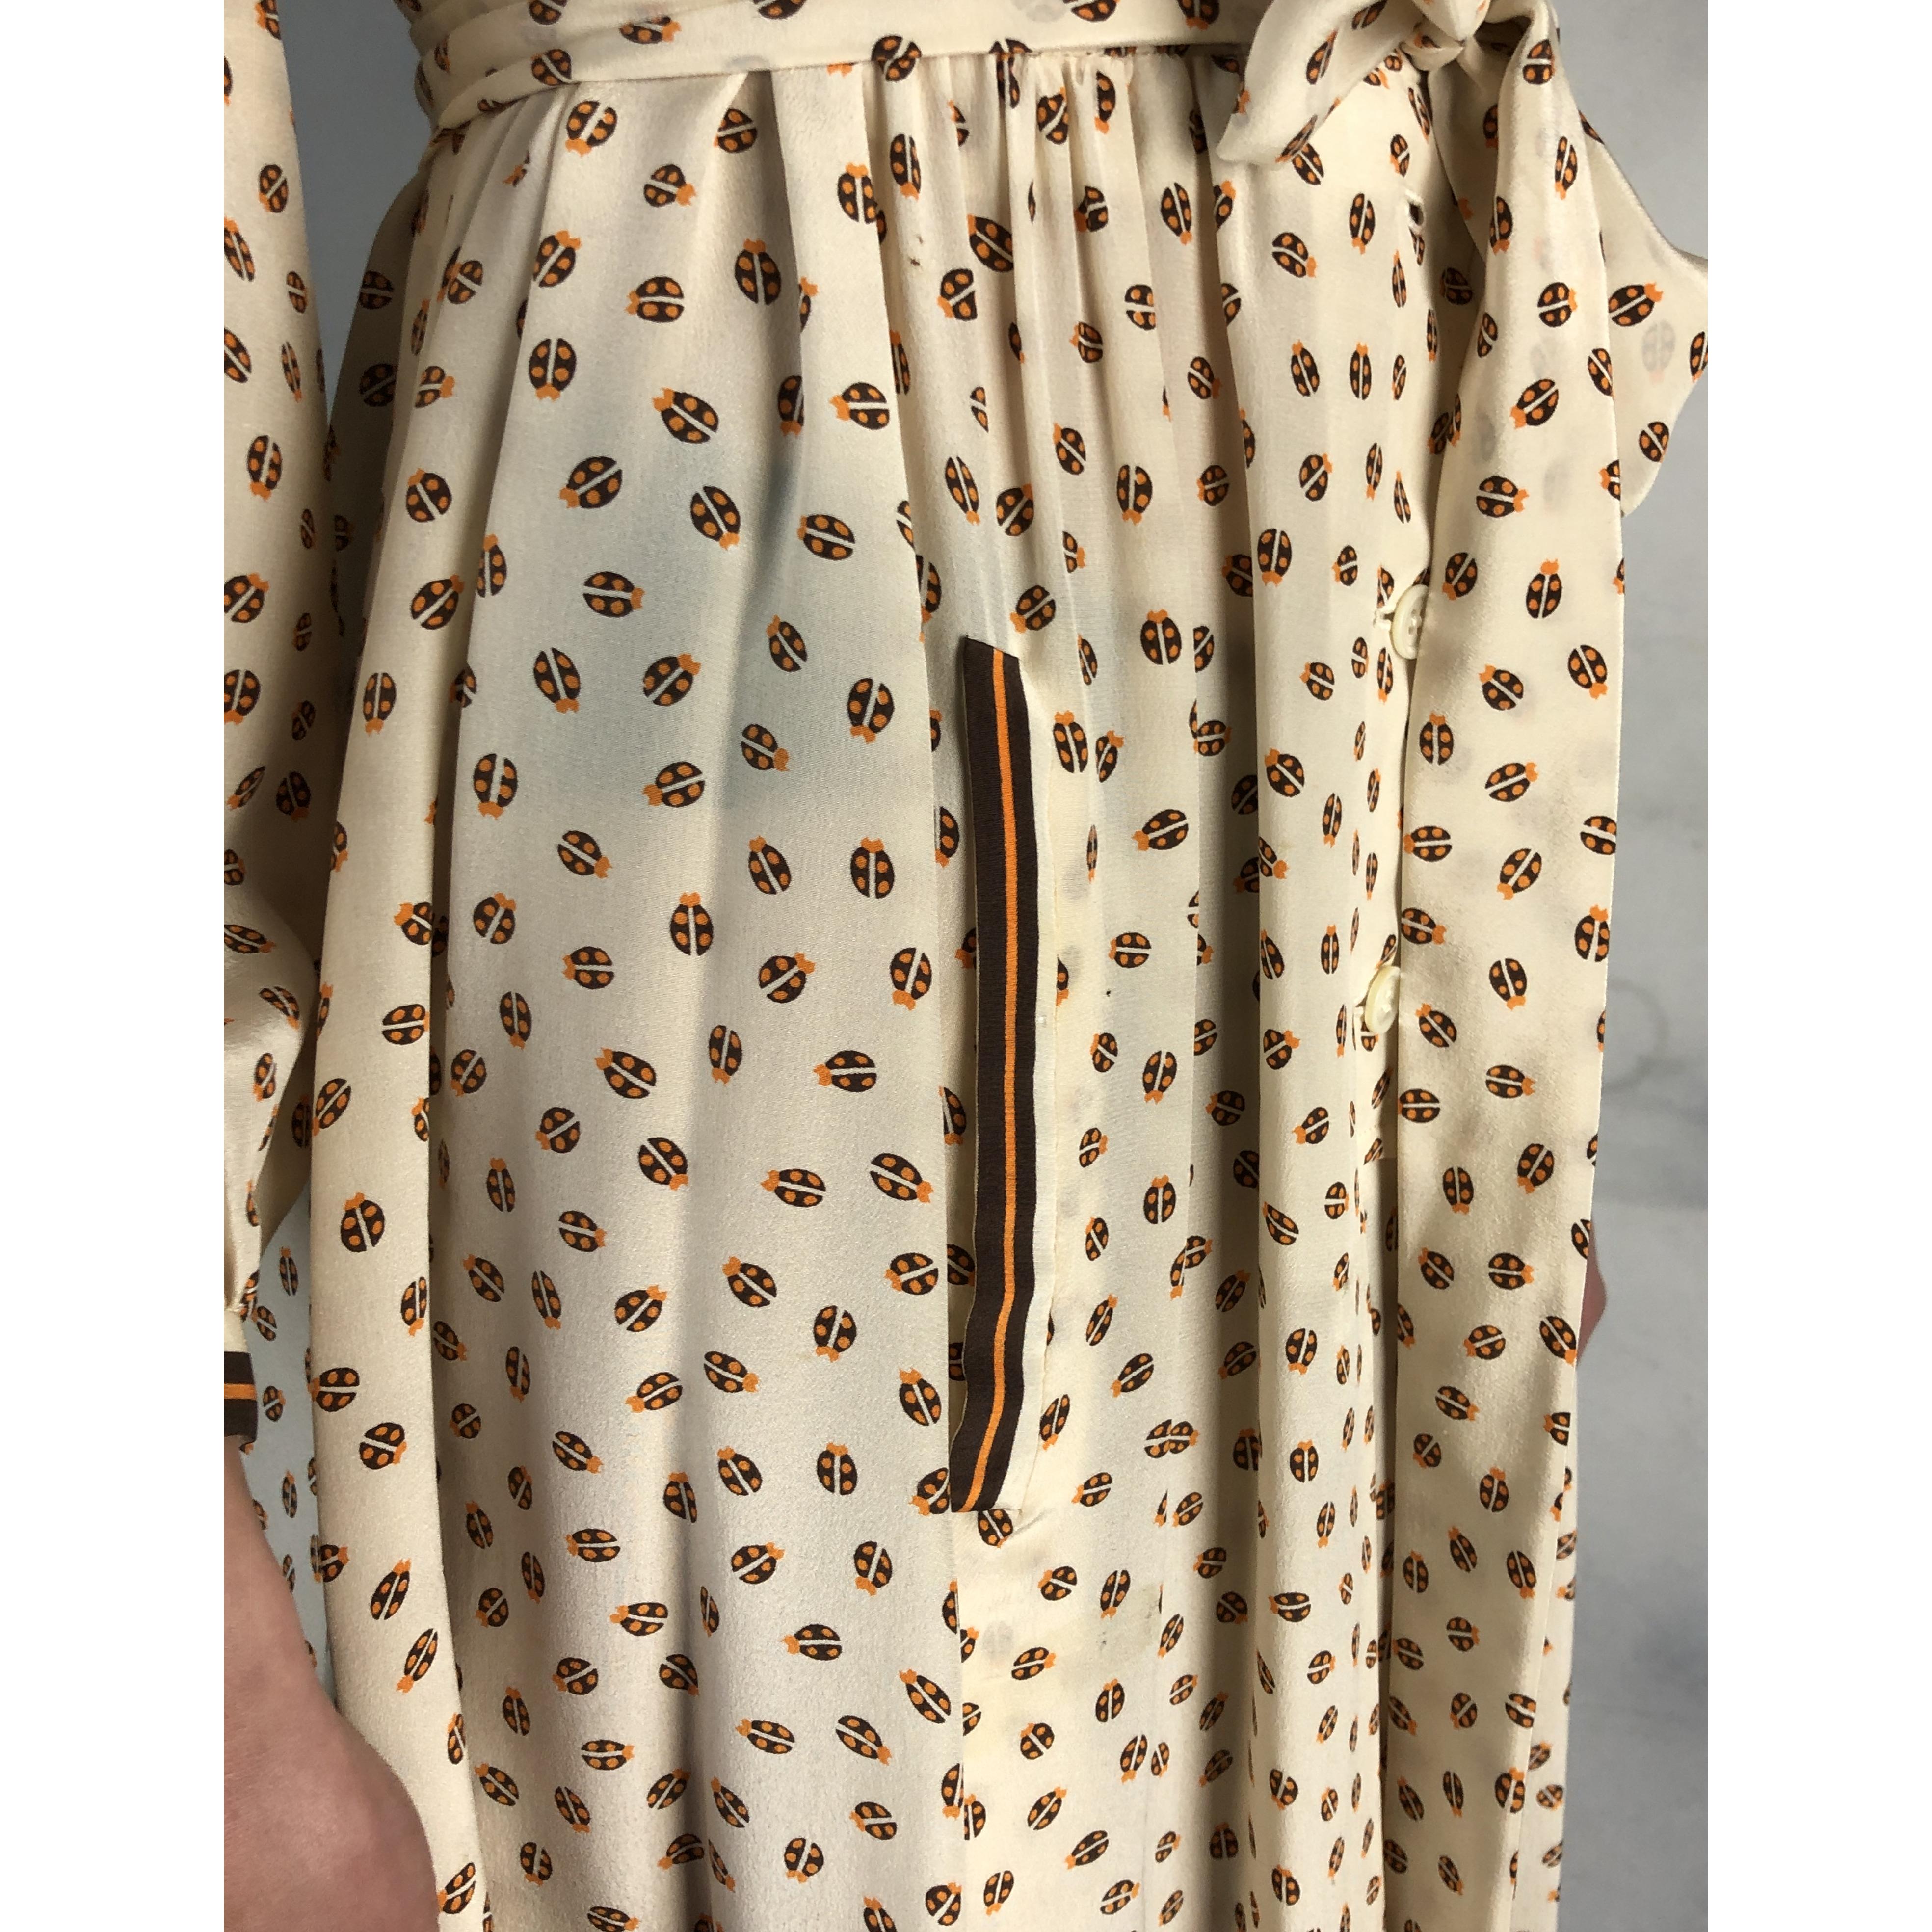 Hermès archival ladybirds print silk chiffon dress. Circa 1960s 1